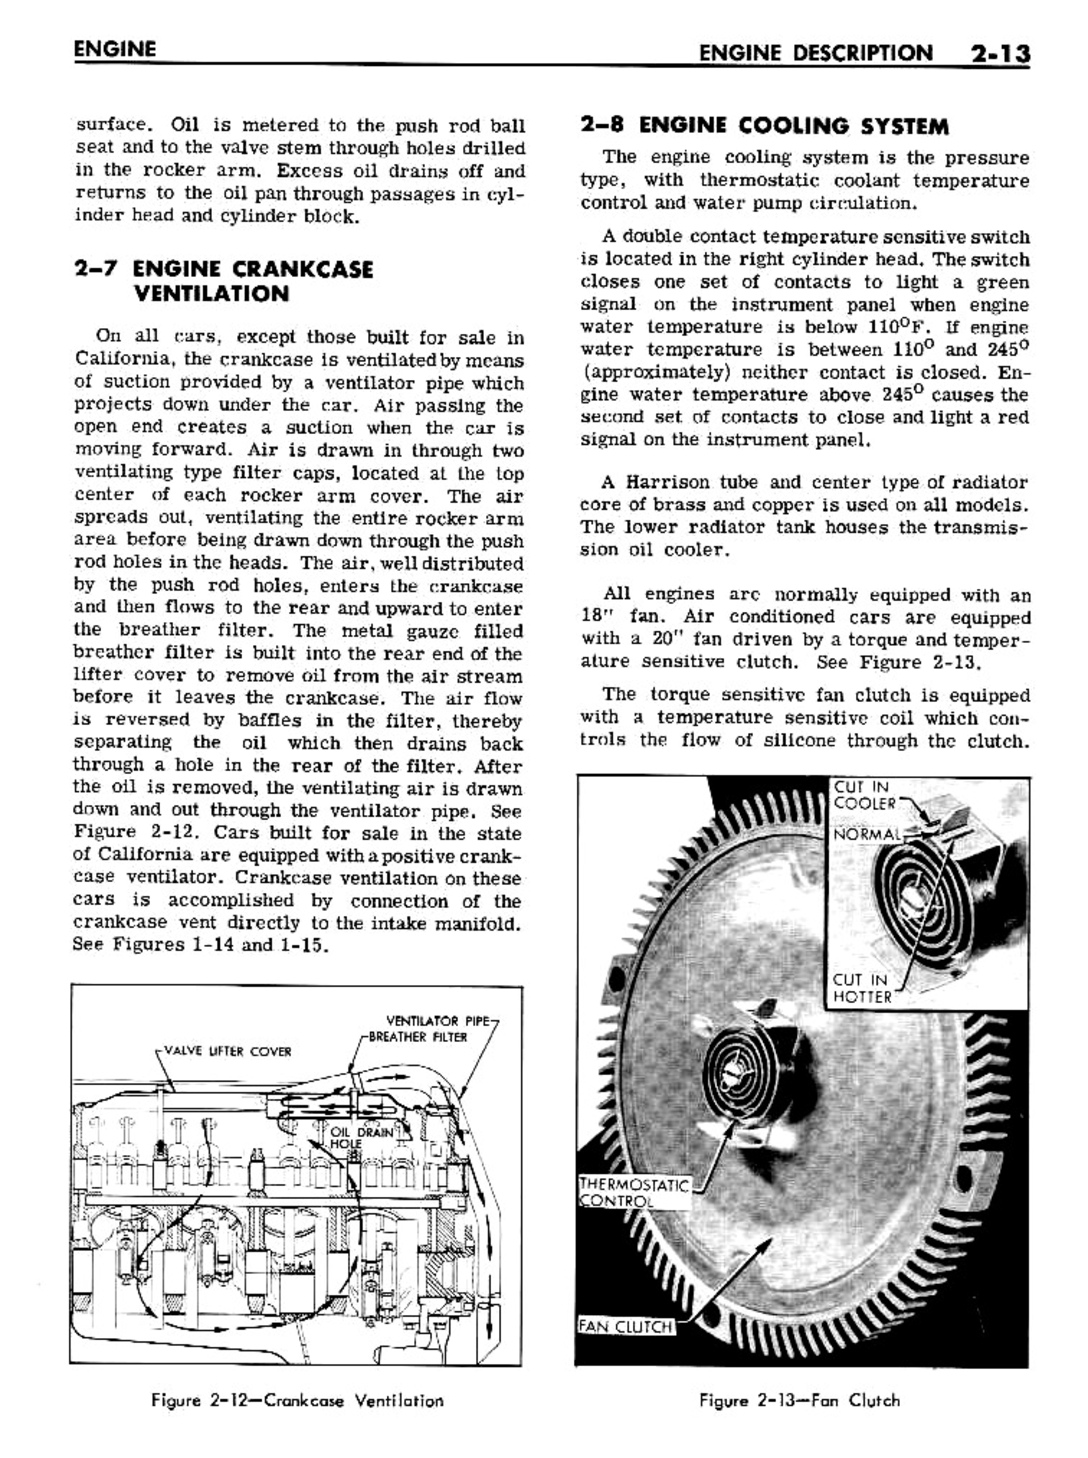 n_03 1961 Buick Shop Manual - Engine-013-013.jpg